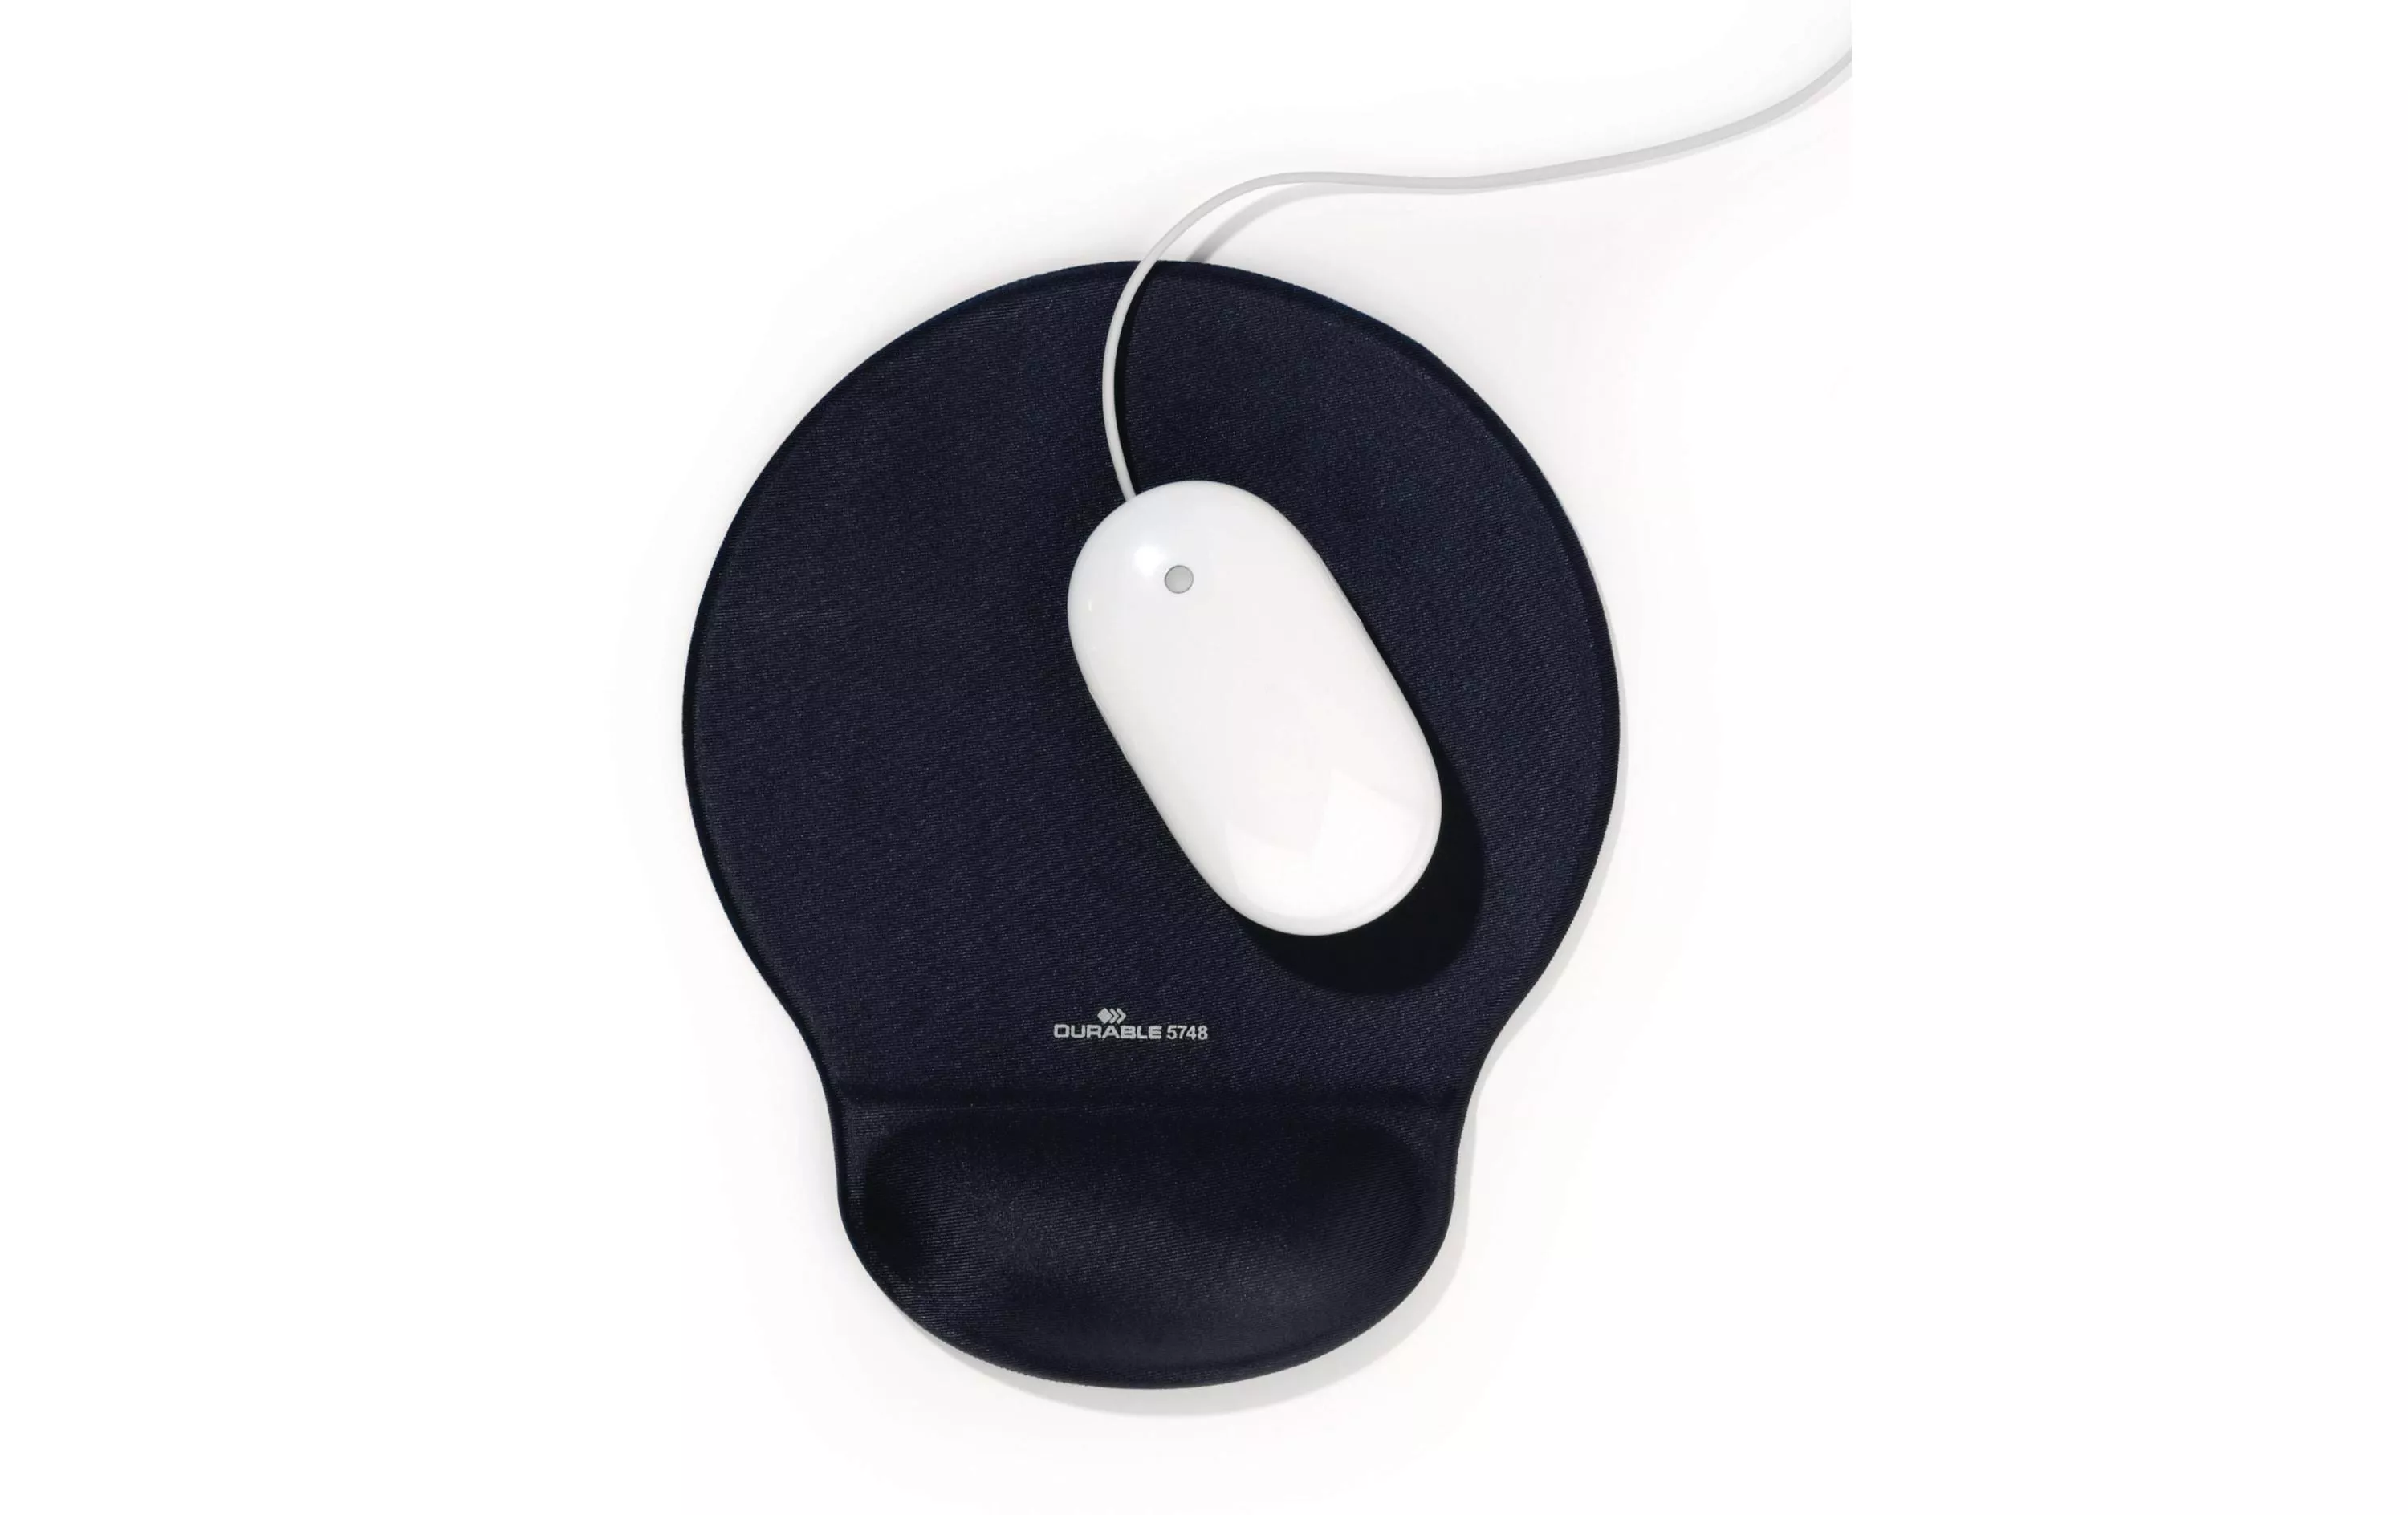 Tappetino ergonomico per mouse DURABLE Ergotp Antracite